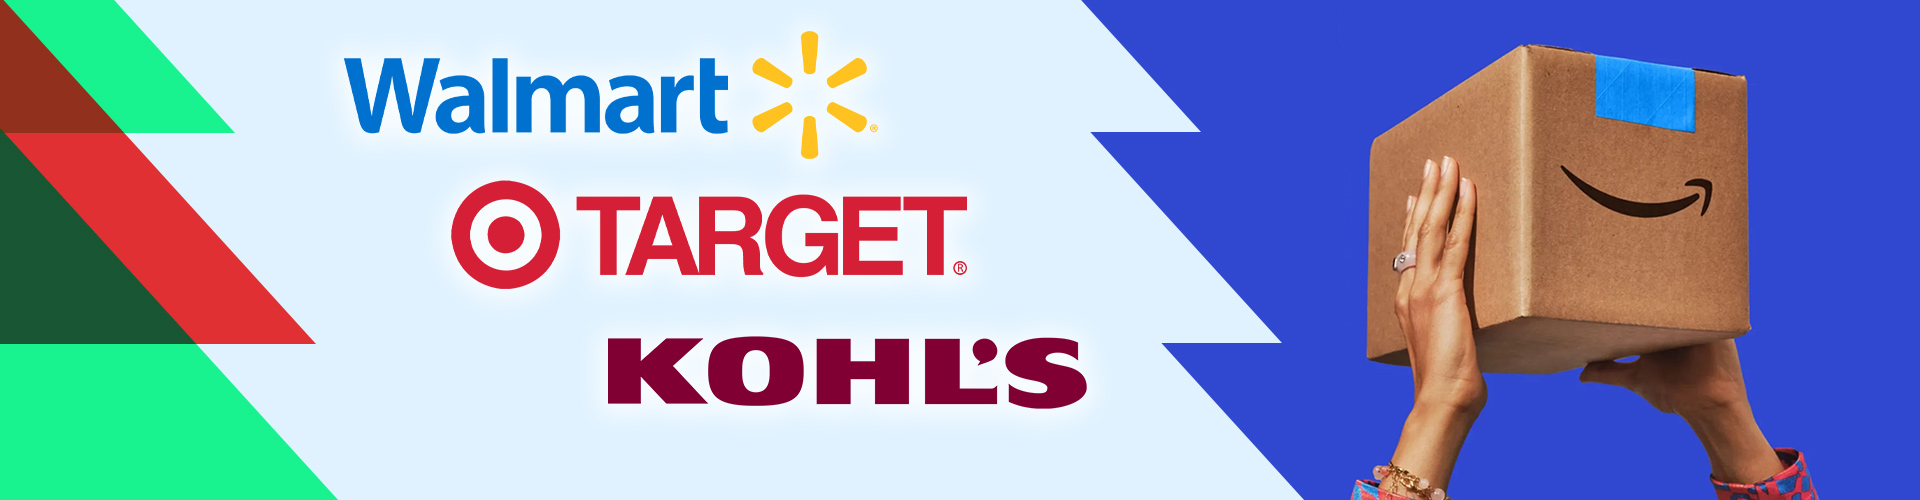 Blog banner featuring Amazon Prime box next to Walmart, Target, and Kohl's logos